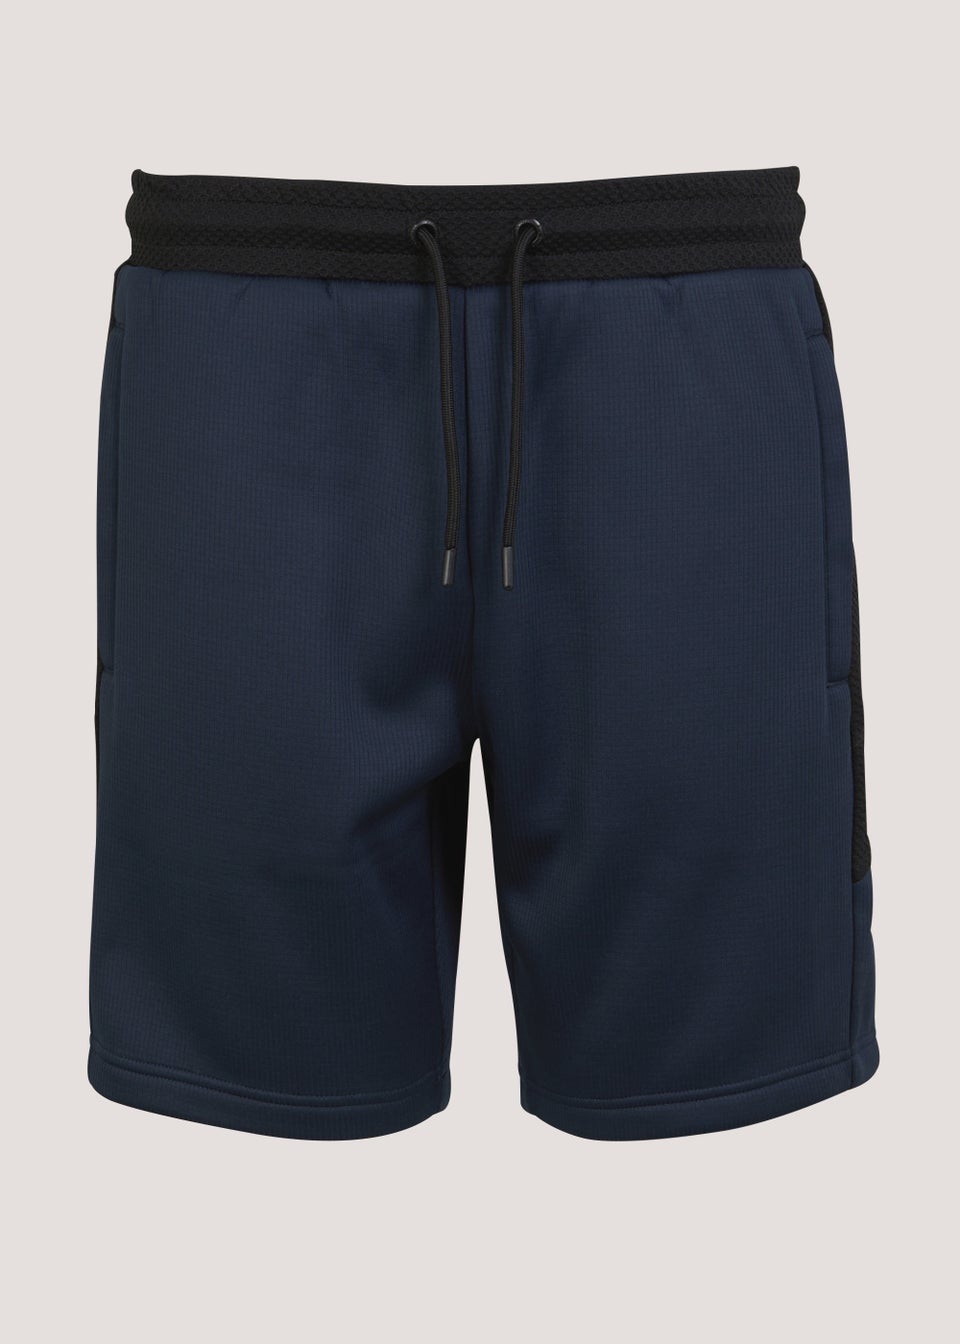 US Athletic Navy Jogger Shorts